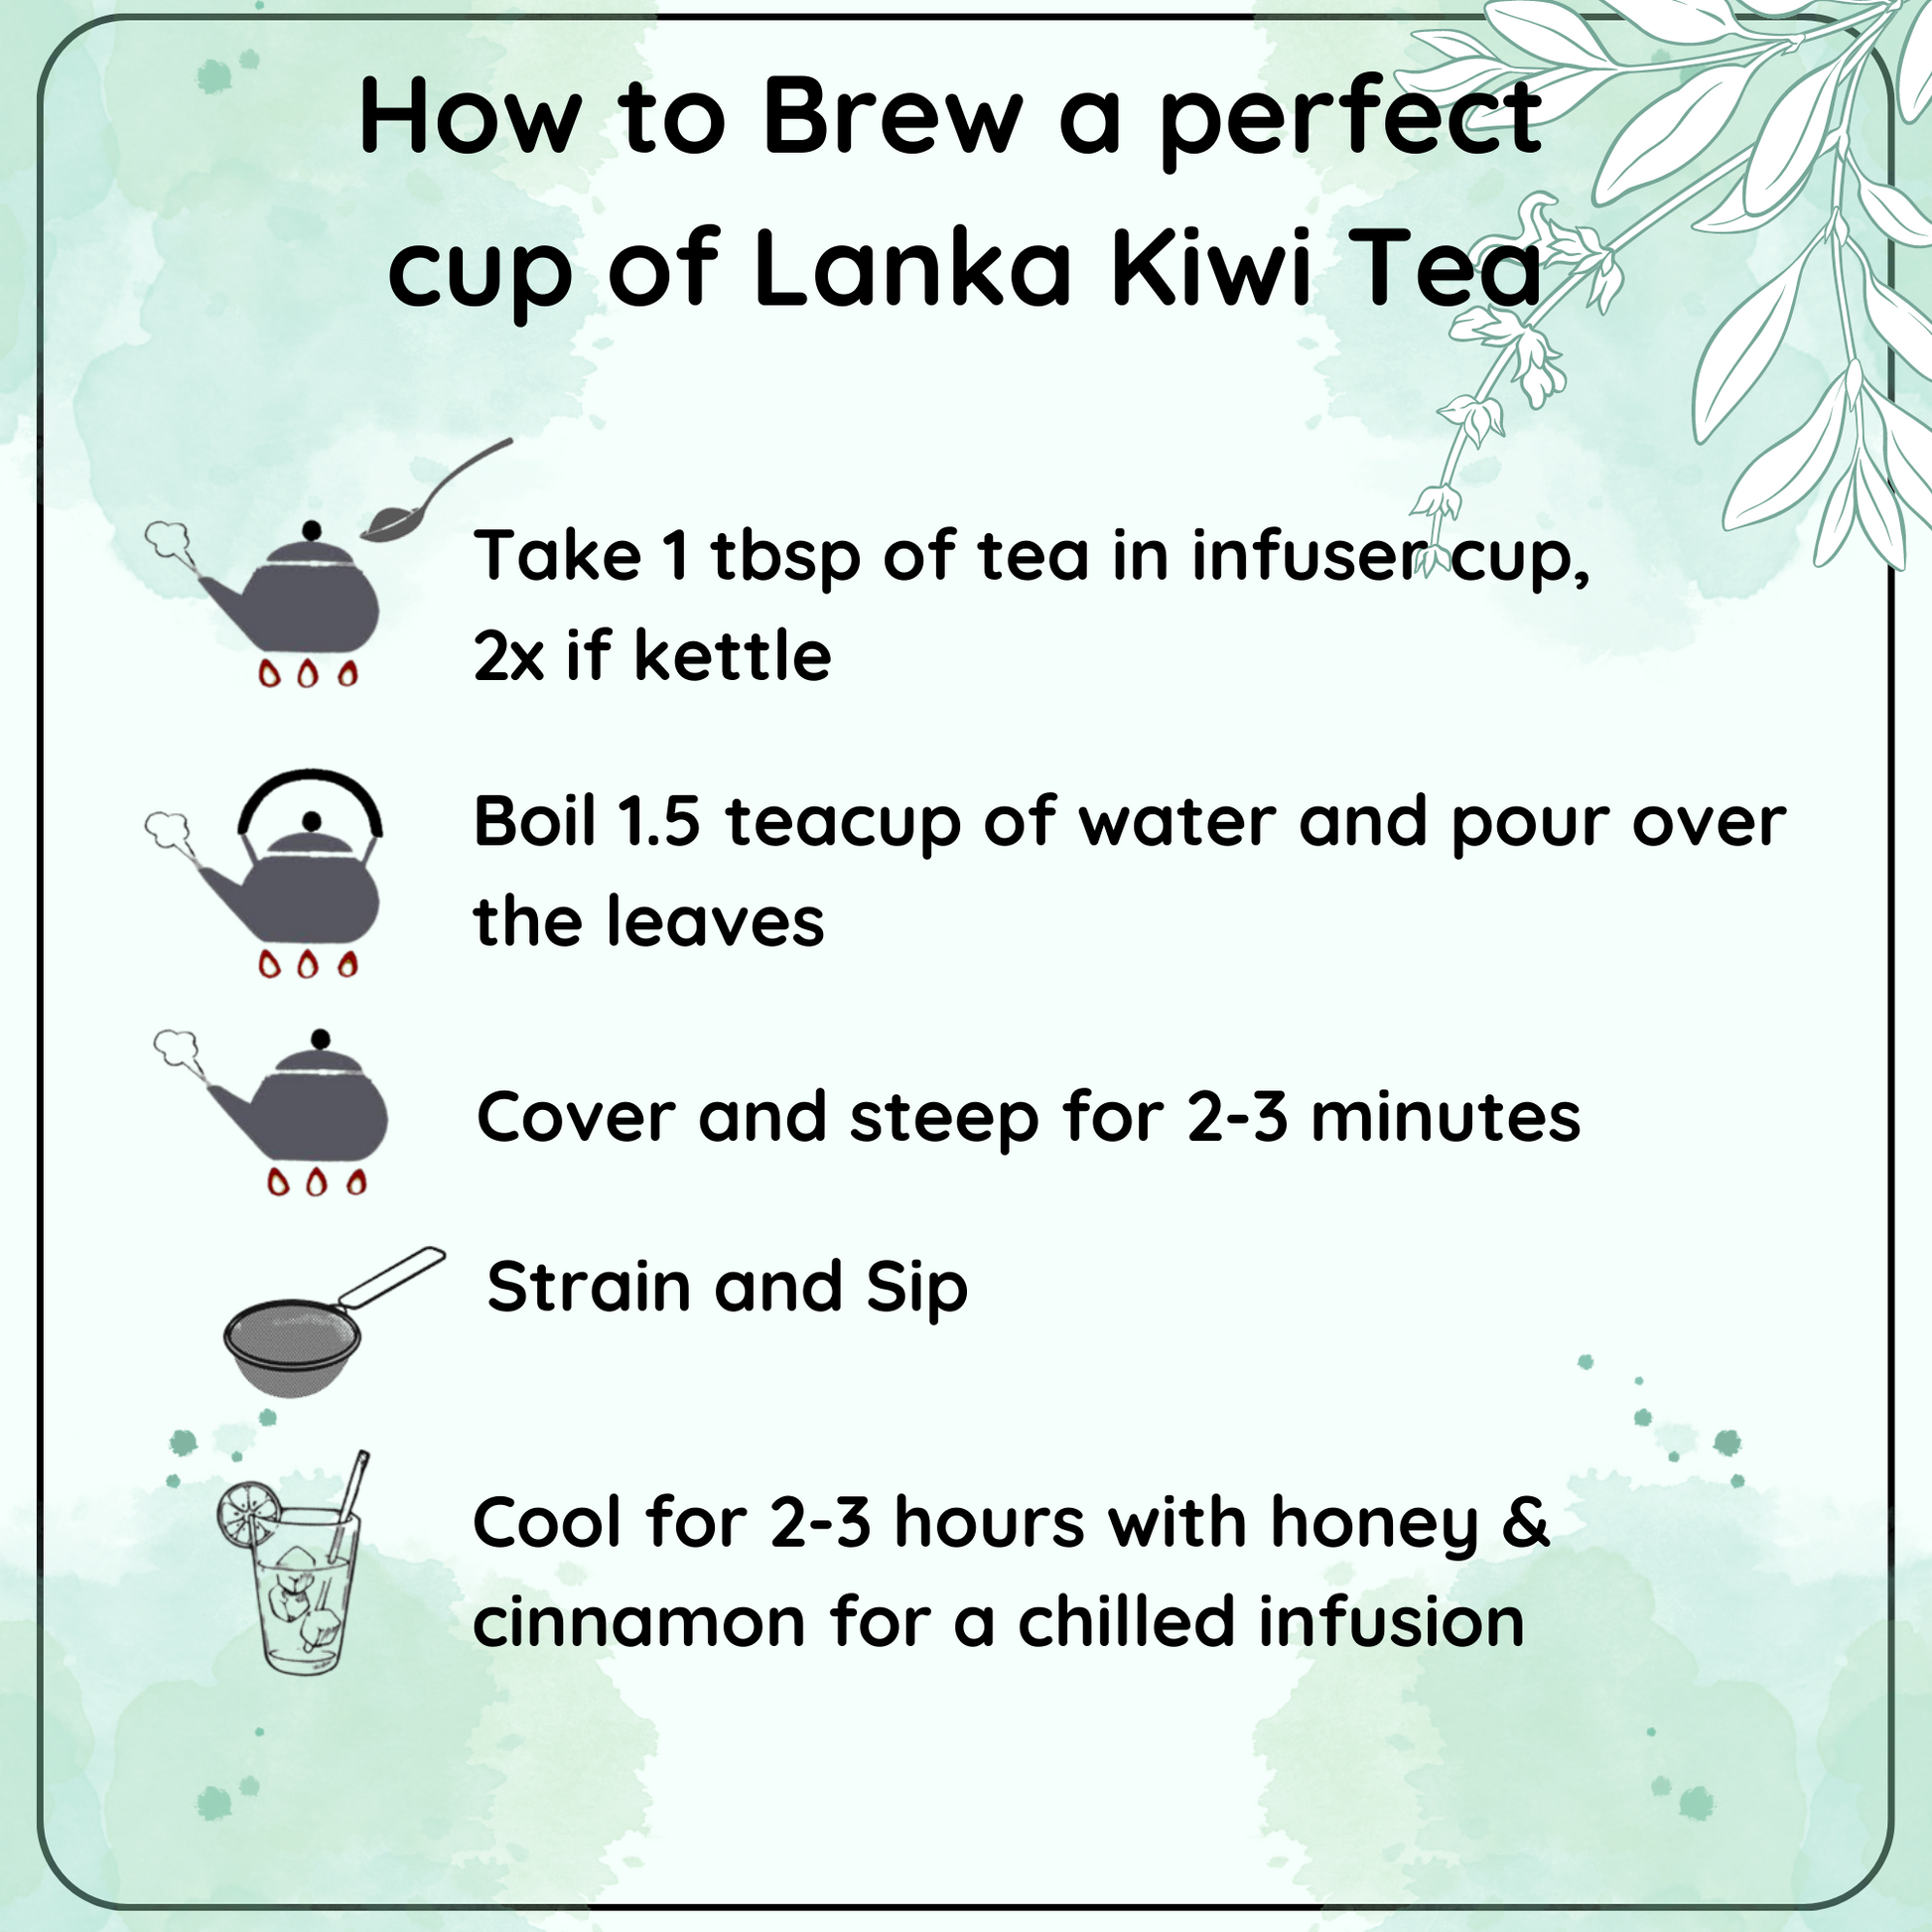 REJUVENATING Lanka Kiwi Tea - A Tropical Delight with Antioxidants and Vitamin C - Radhikas Fine Teas and Whatnots